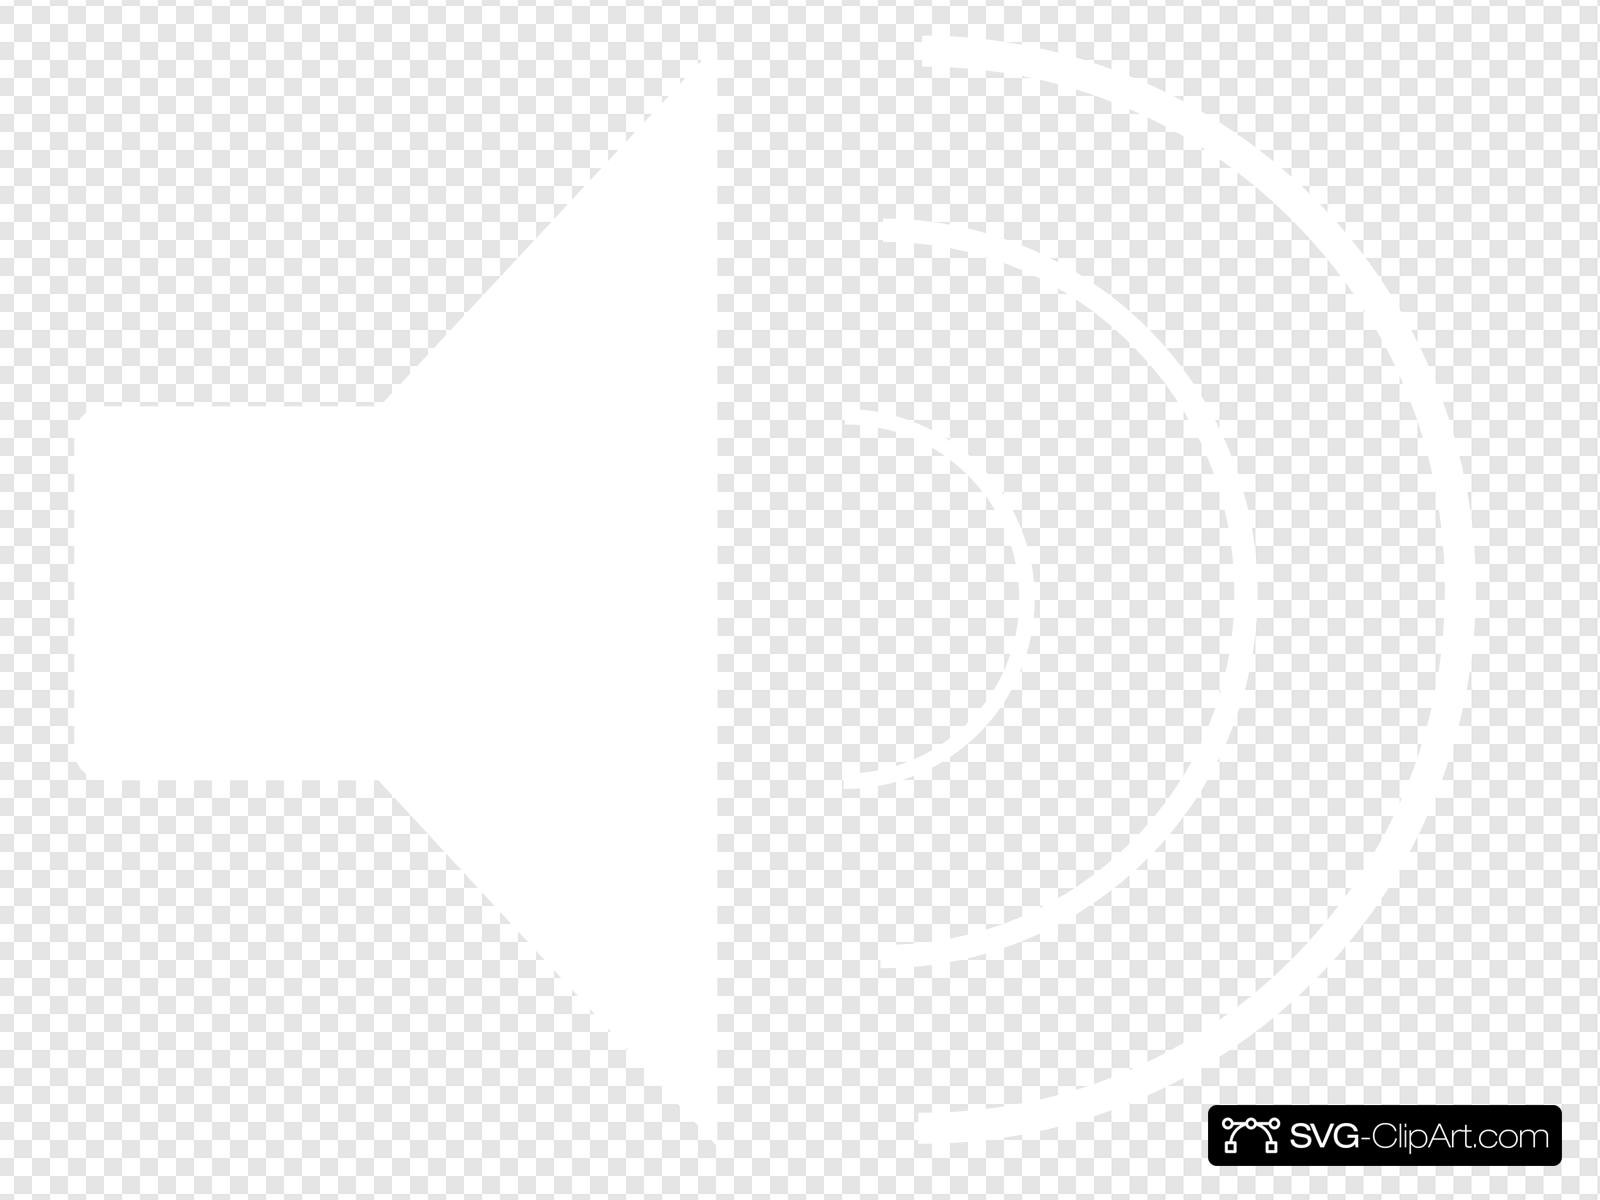 White Volume Clip art, Icon and SVG.